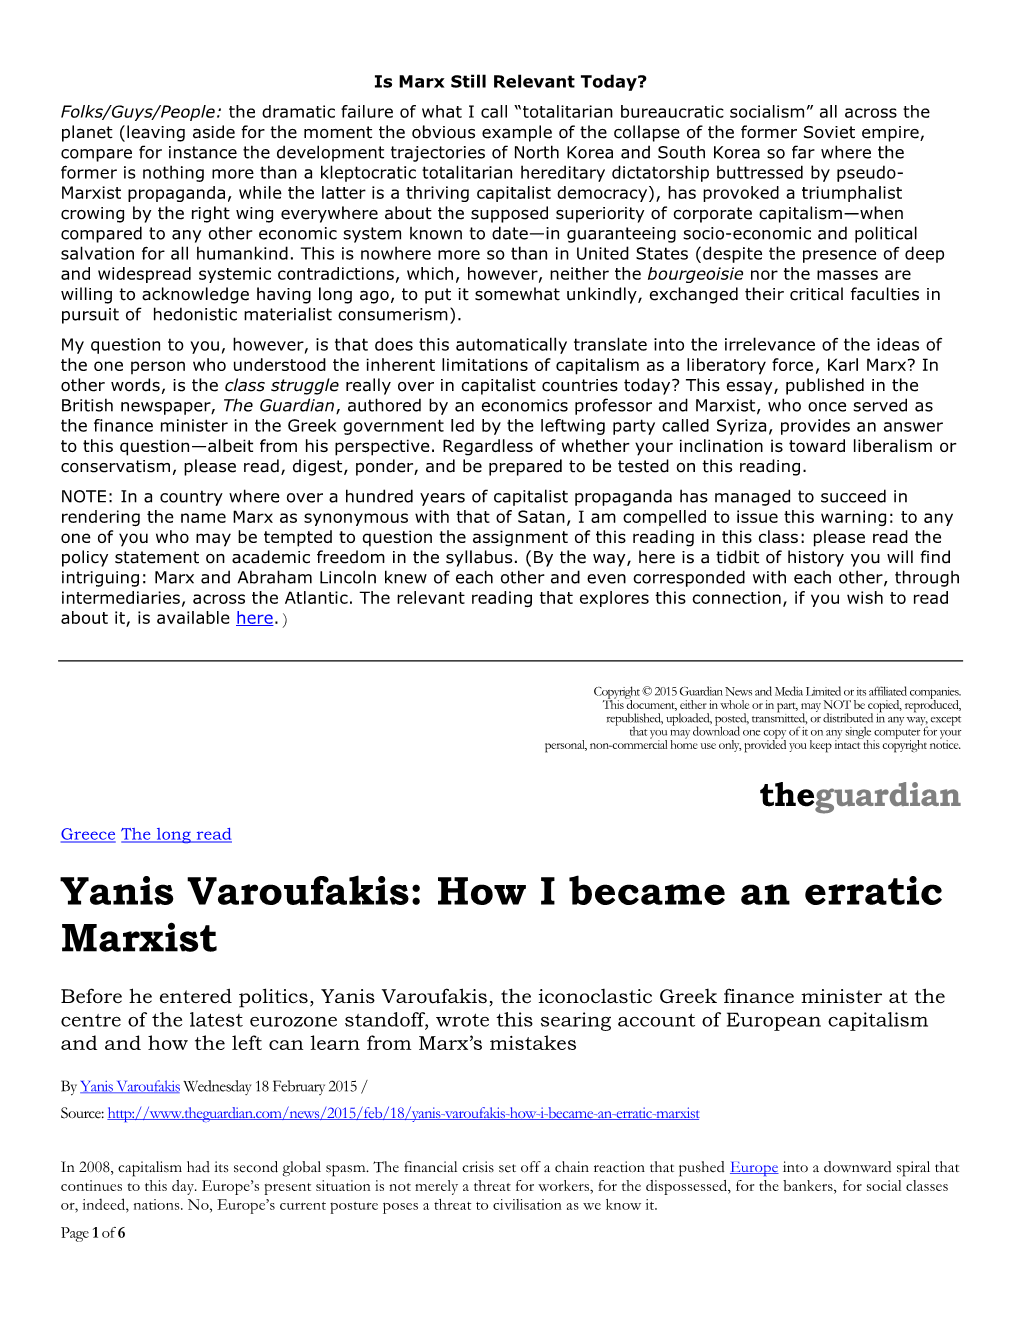 Yanis Varoufakis: How I Became an Erratic Marxist